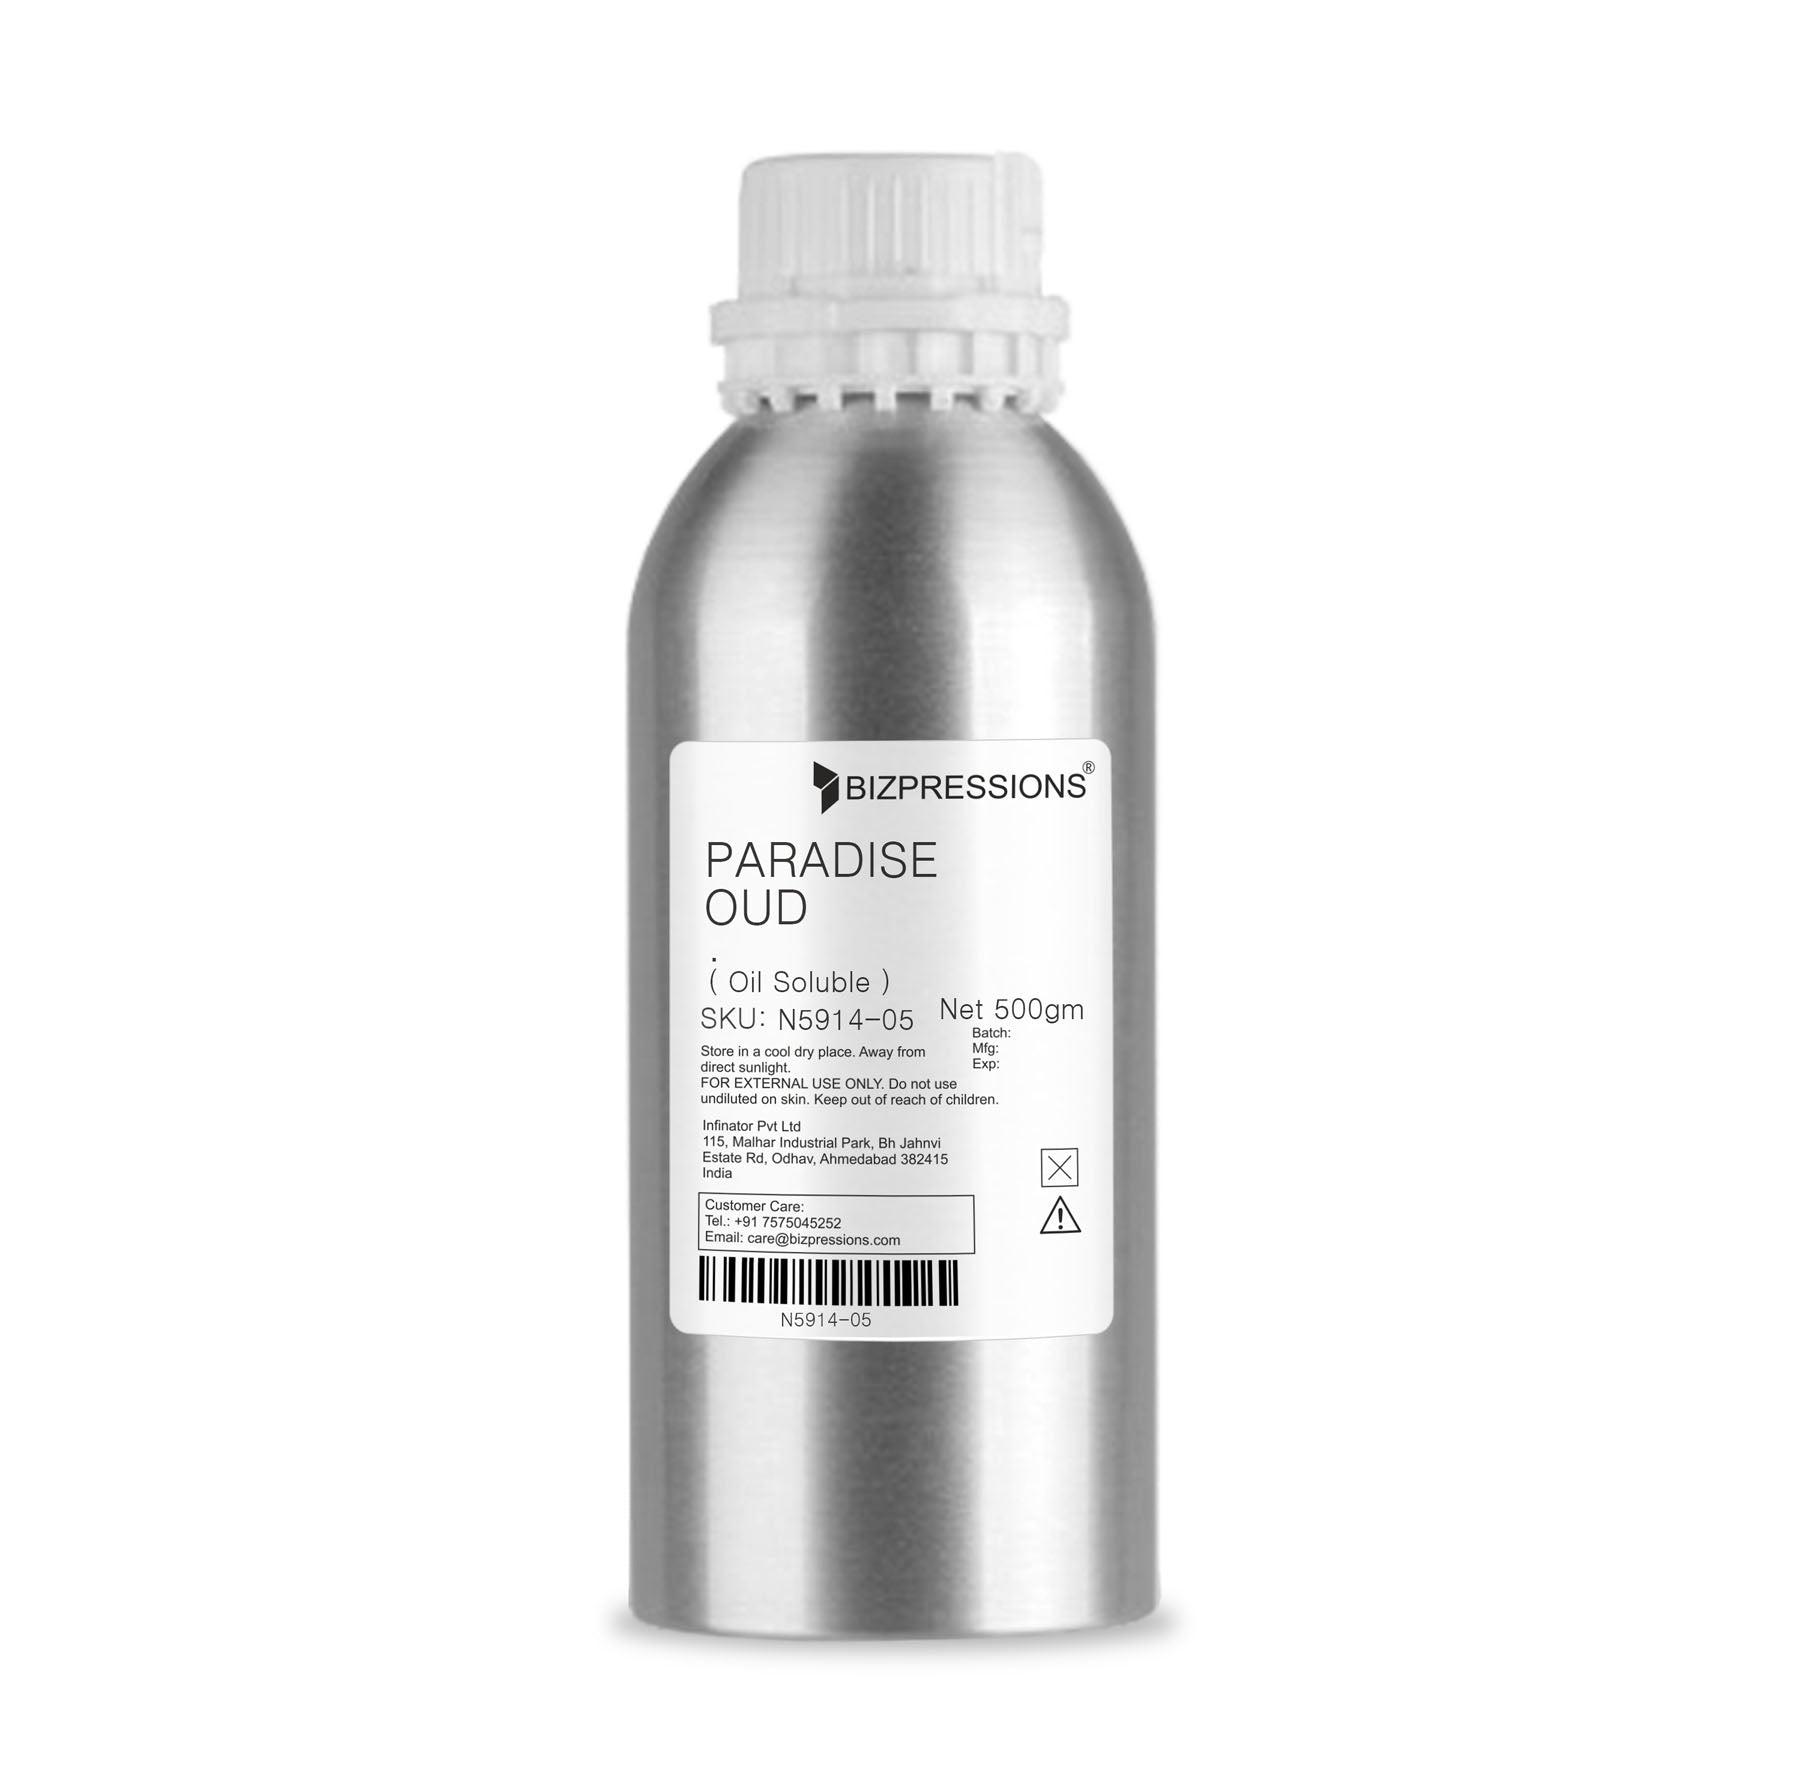 PARADISE OUD - Fragrance ( Oil Soluble ) - 500 gm